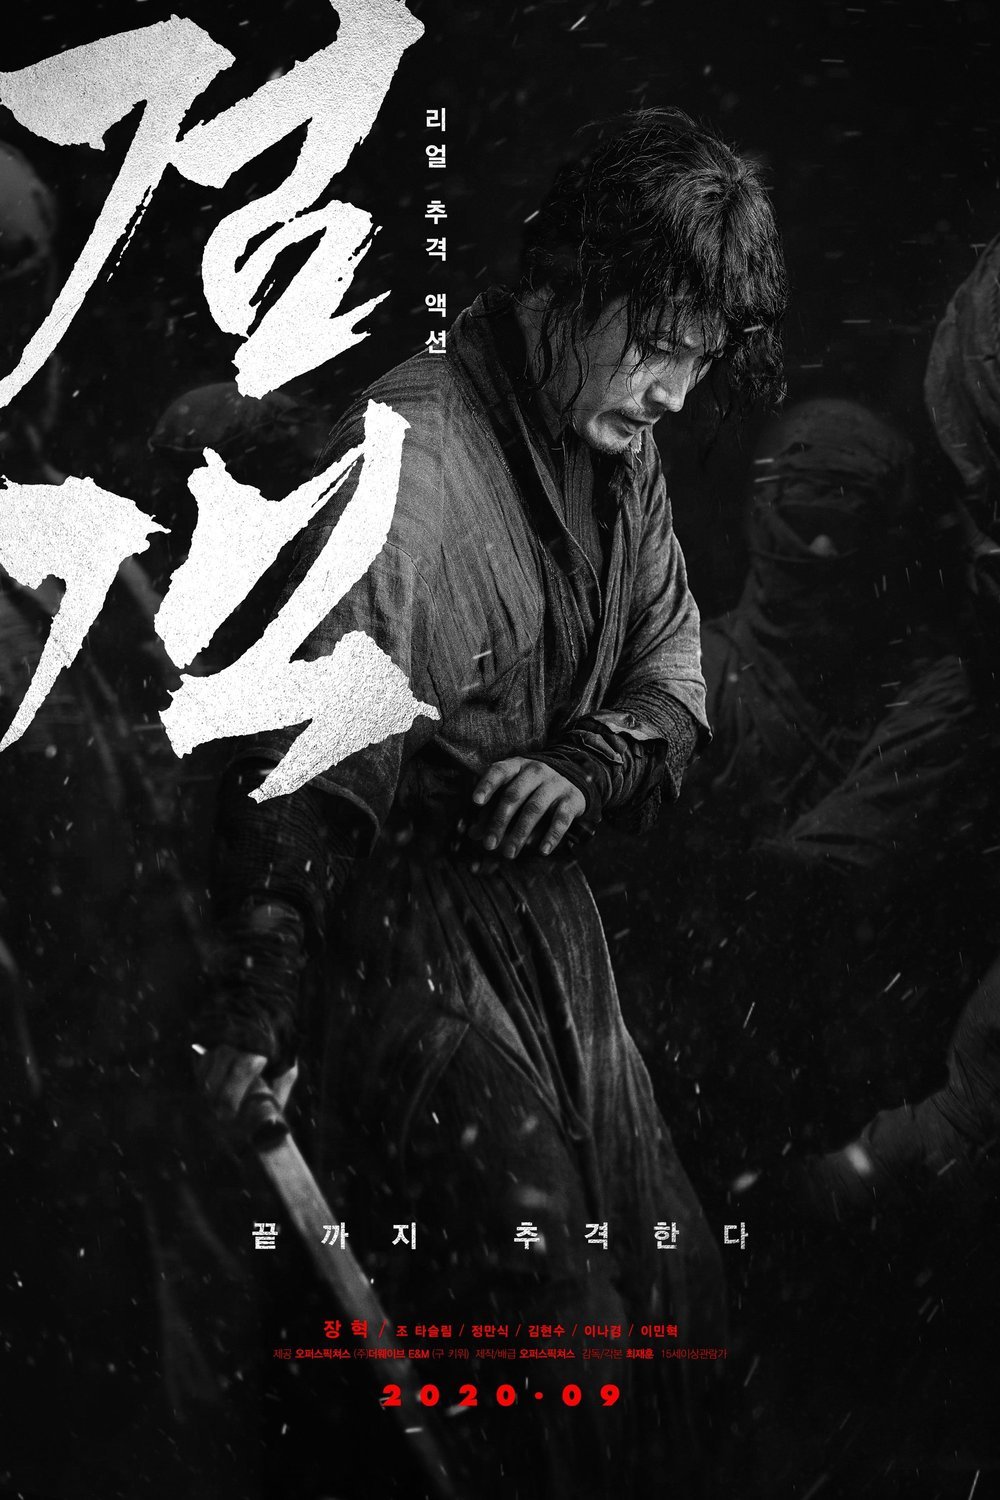 L'affiche originale du film Geom-gaek en coréen